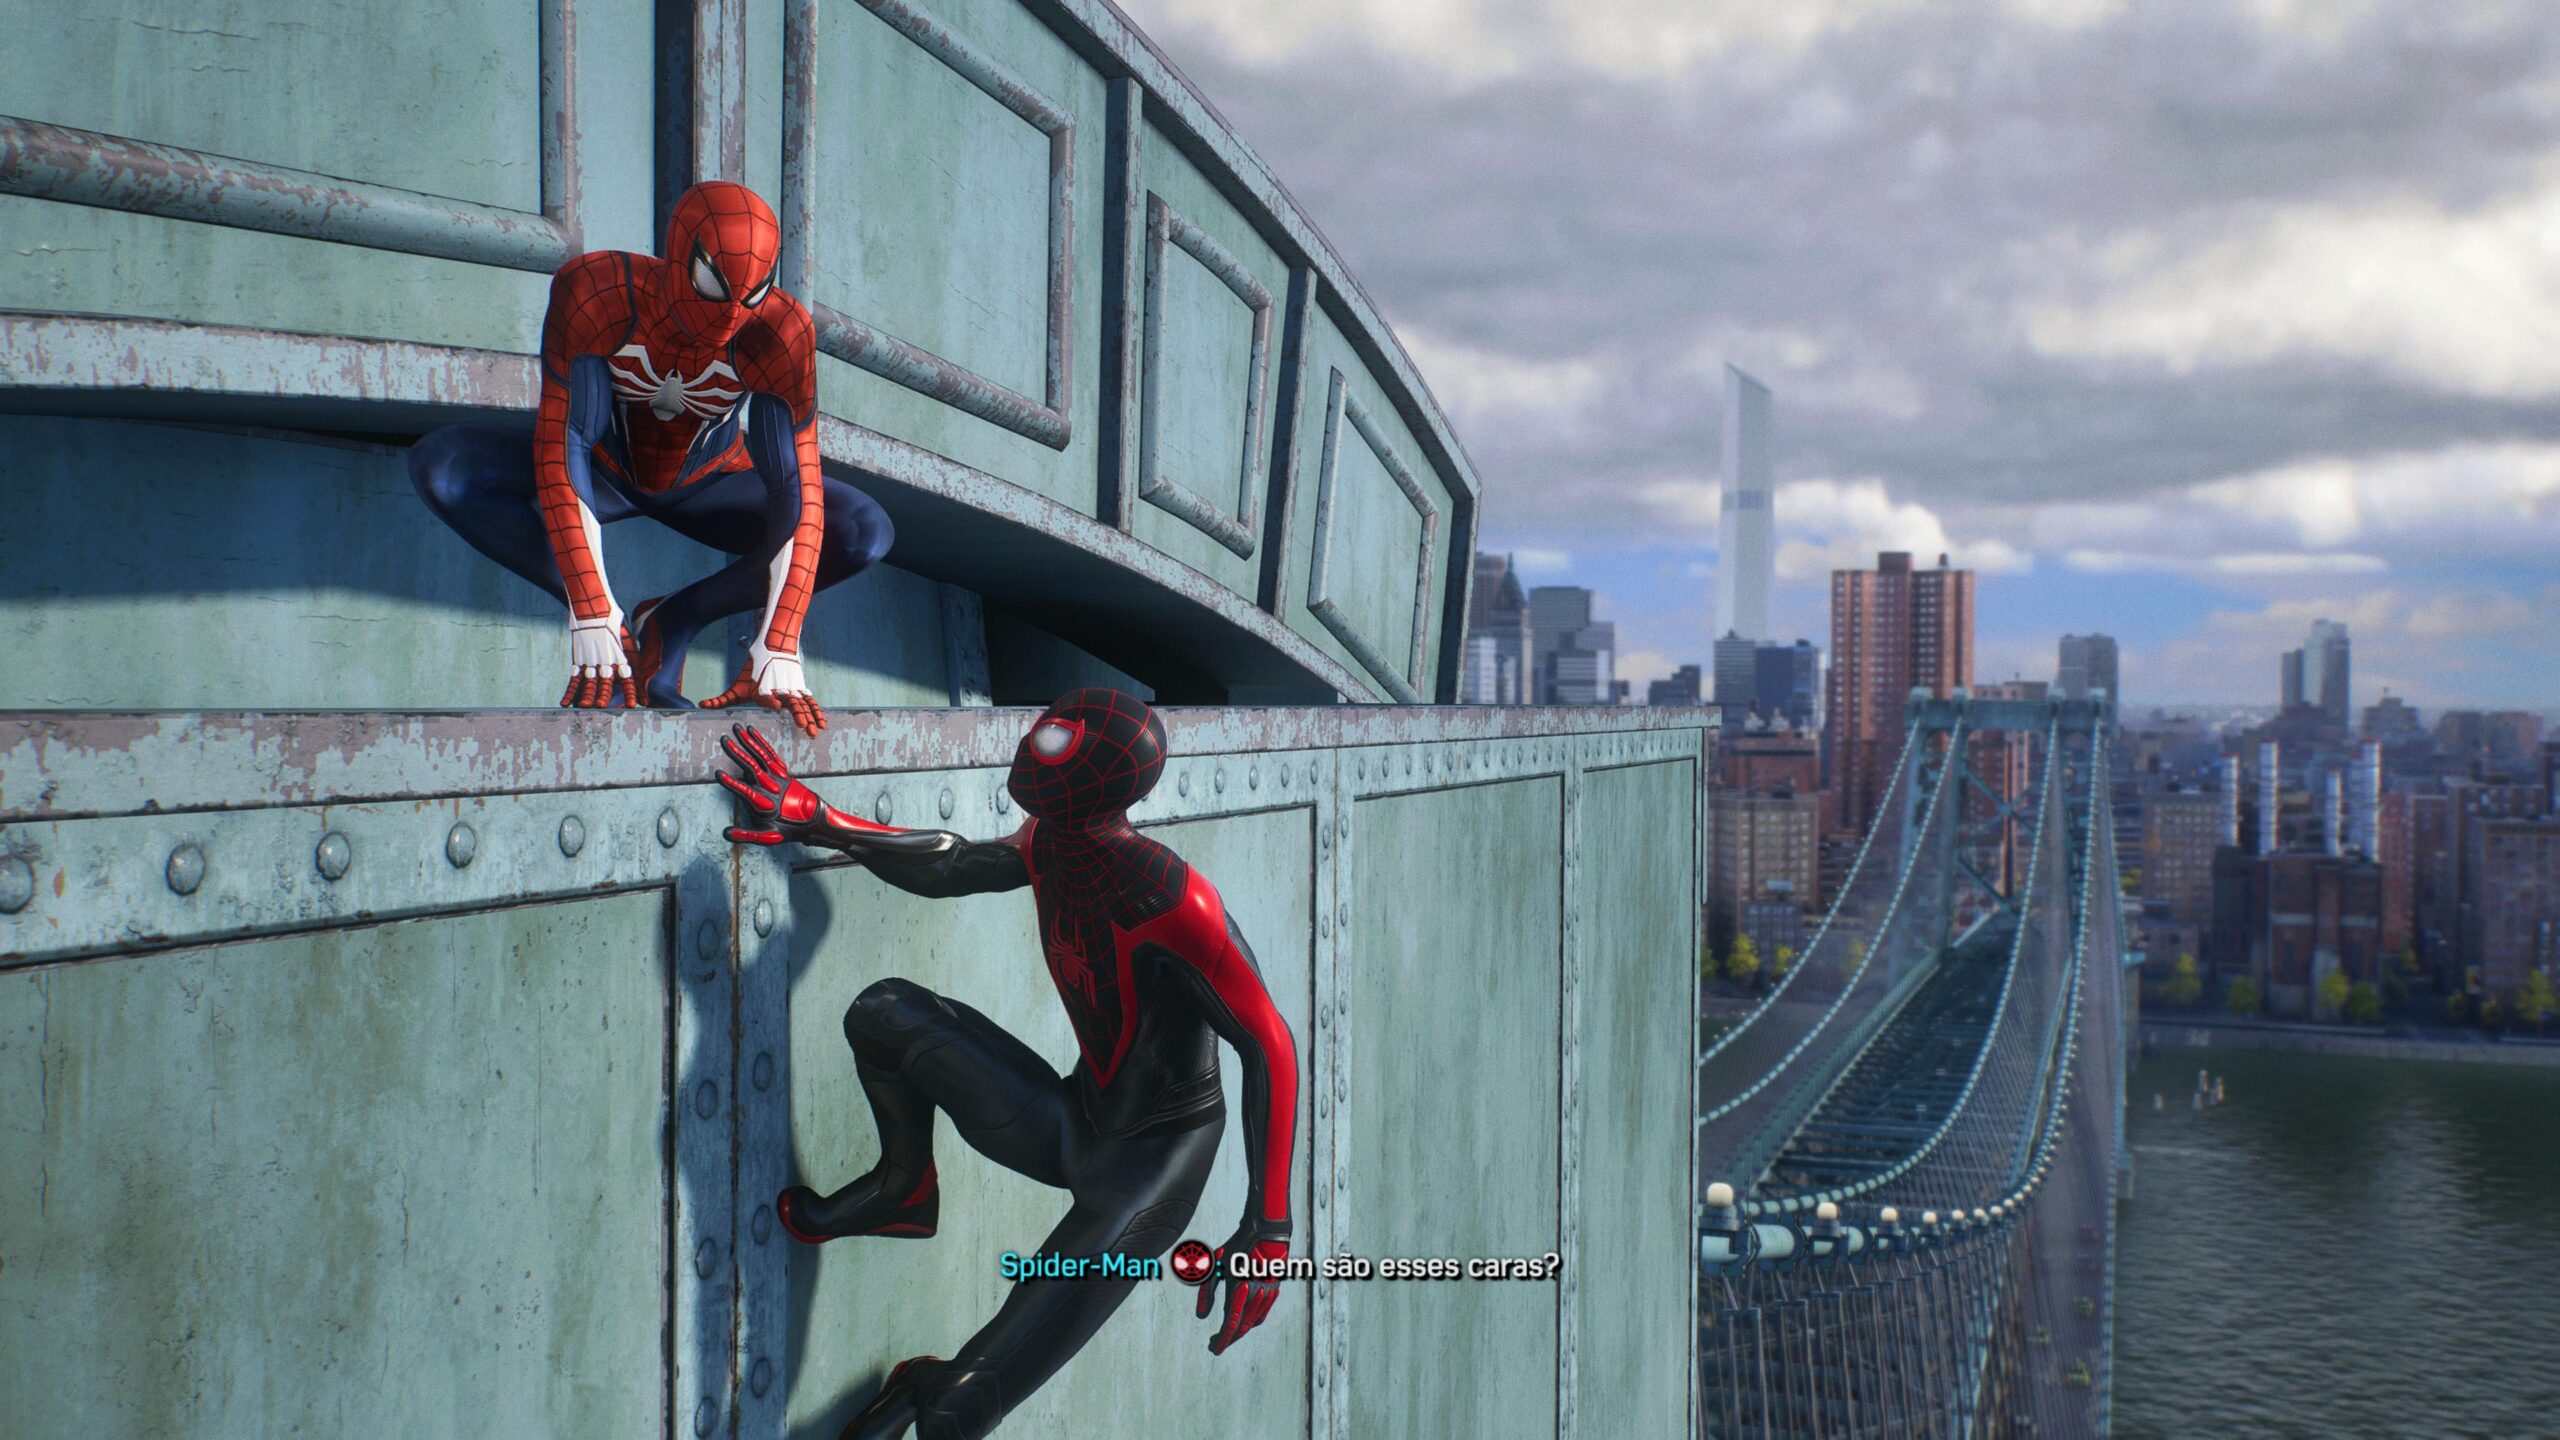 🕷️ Marvel's Spider-Man 2 - ANÁLISE/REVIEW - VOXEL 🕸️ 